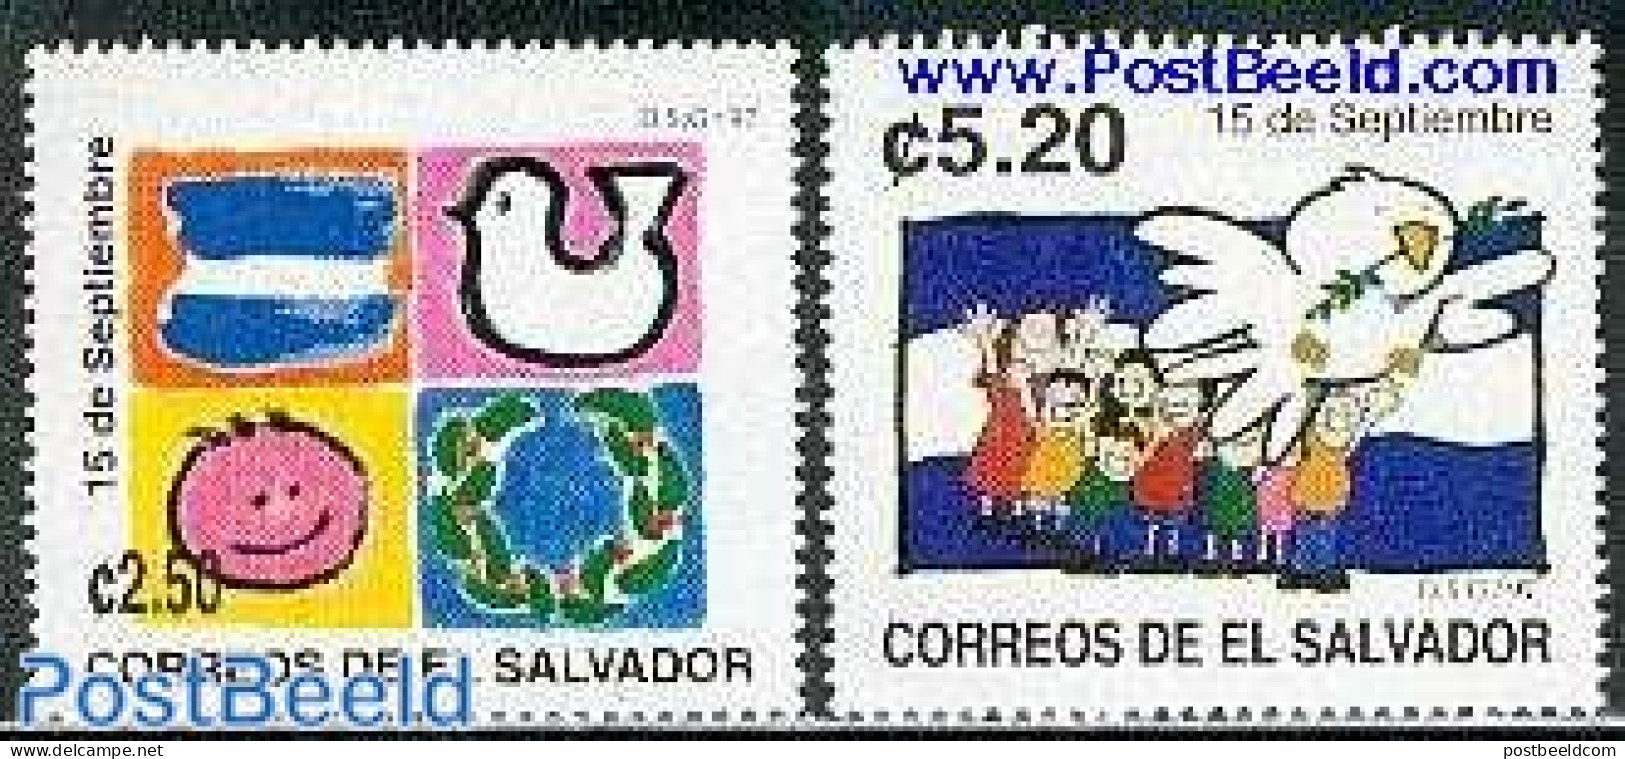 El Salvador 1997 Independence 2v, Mint NH, Art - Children Drawings - Salvador